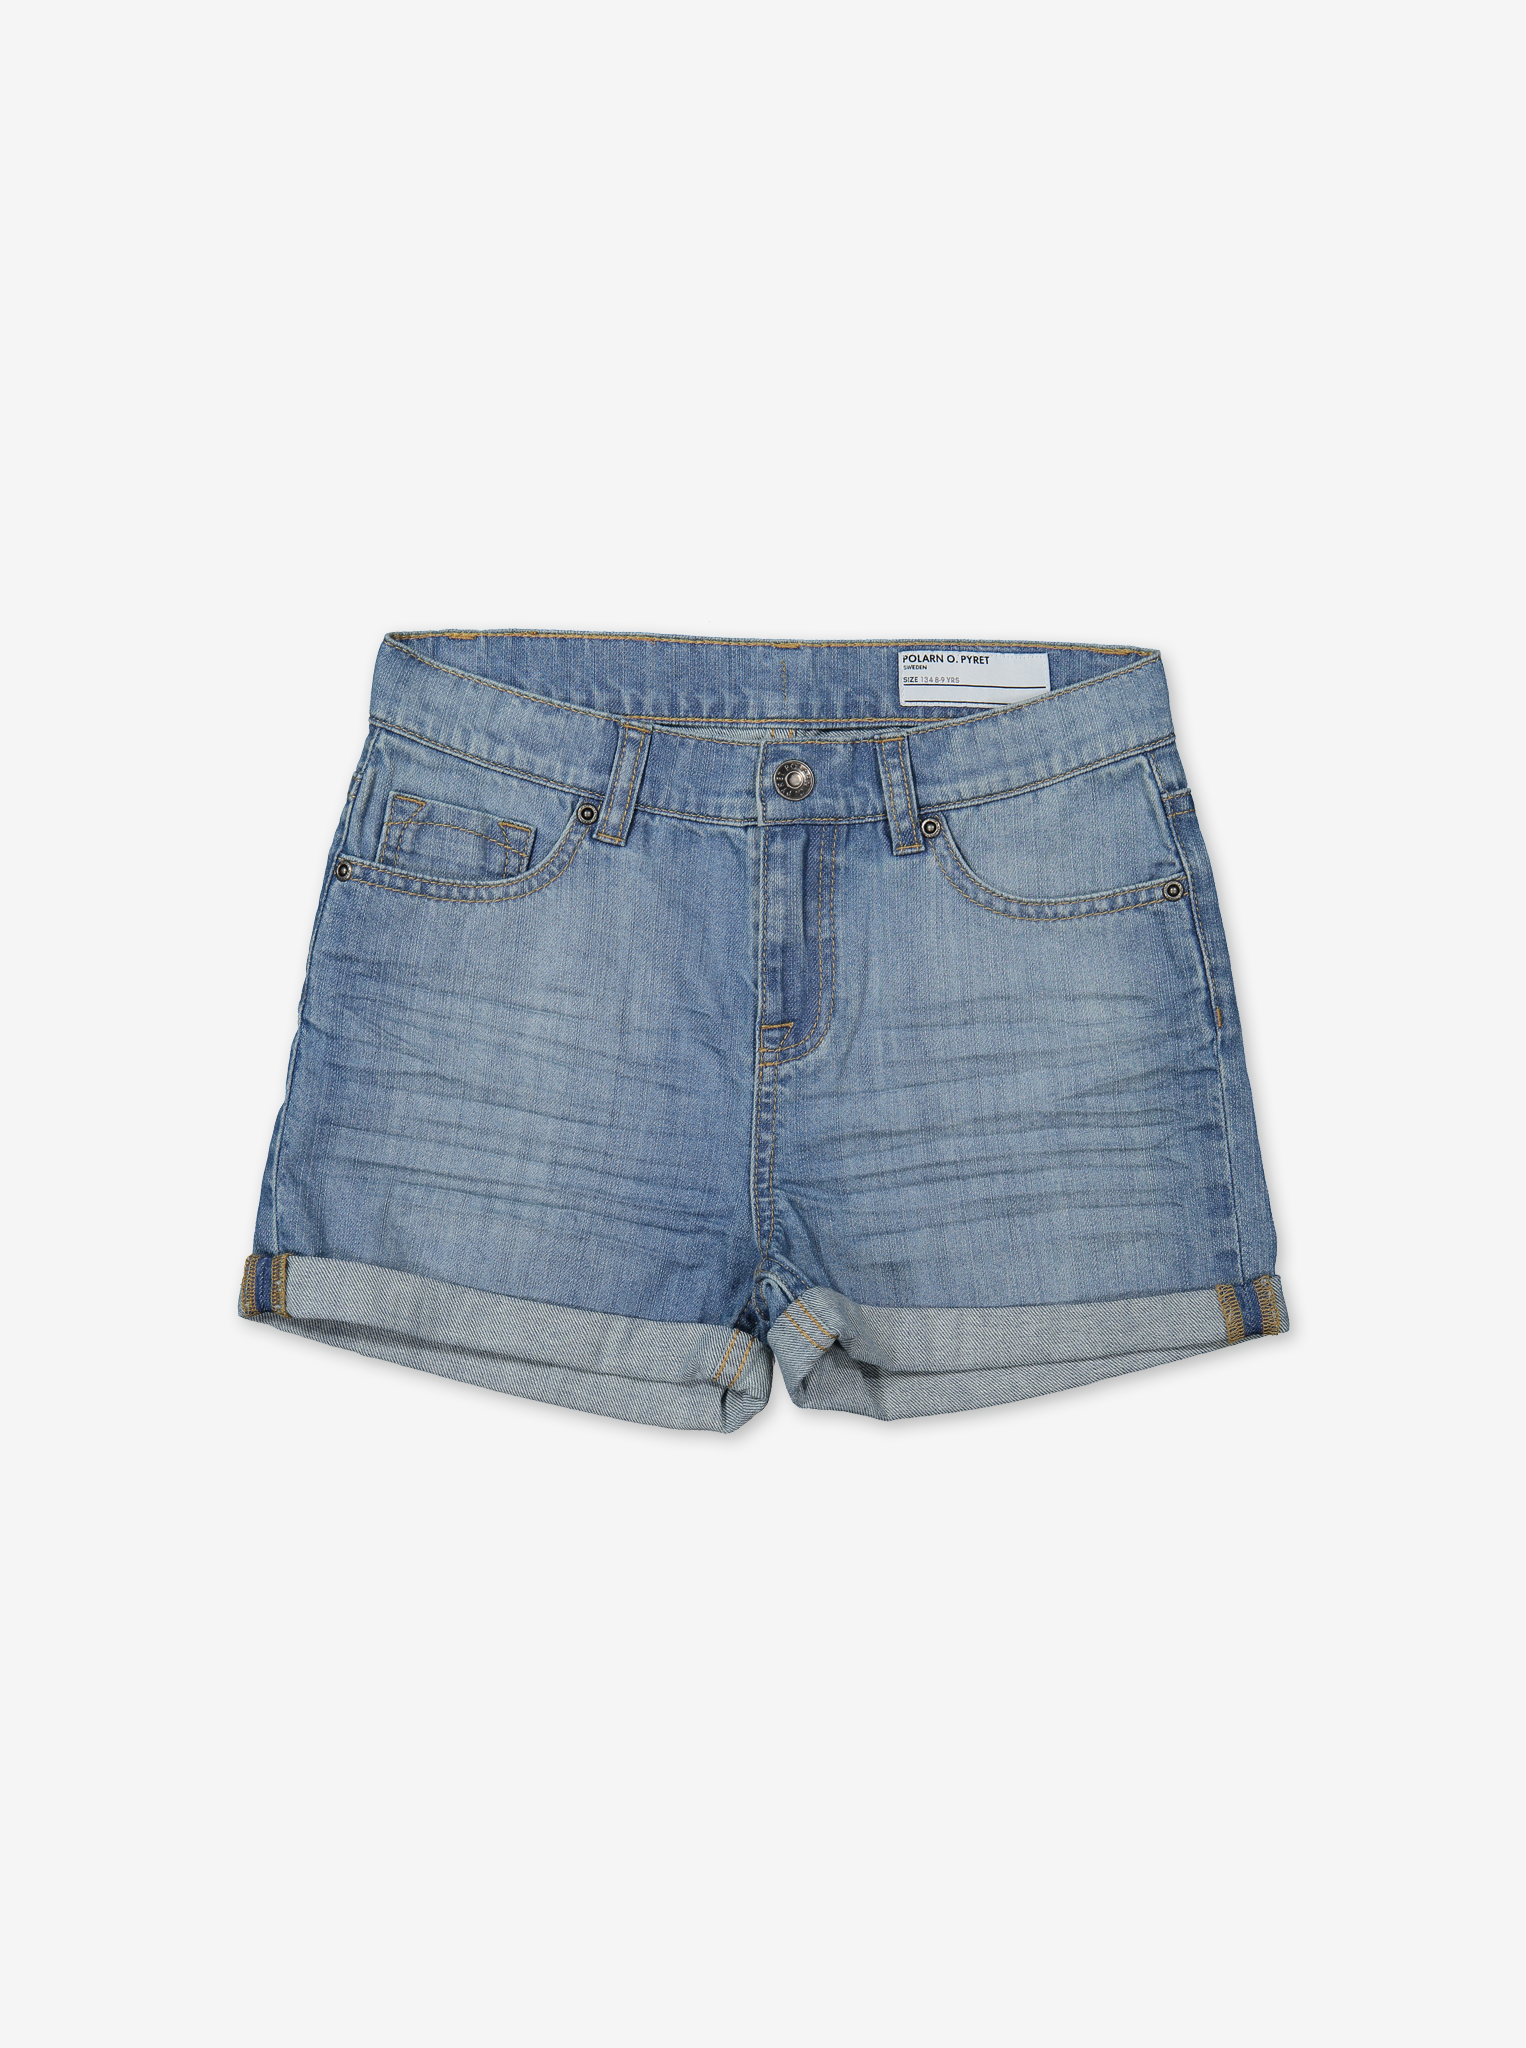 Denim Kids Shorts-Girl-6-12y-Blue